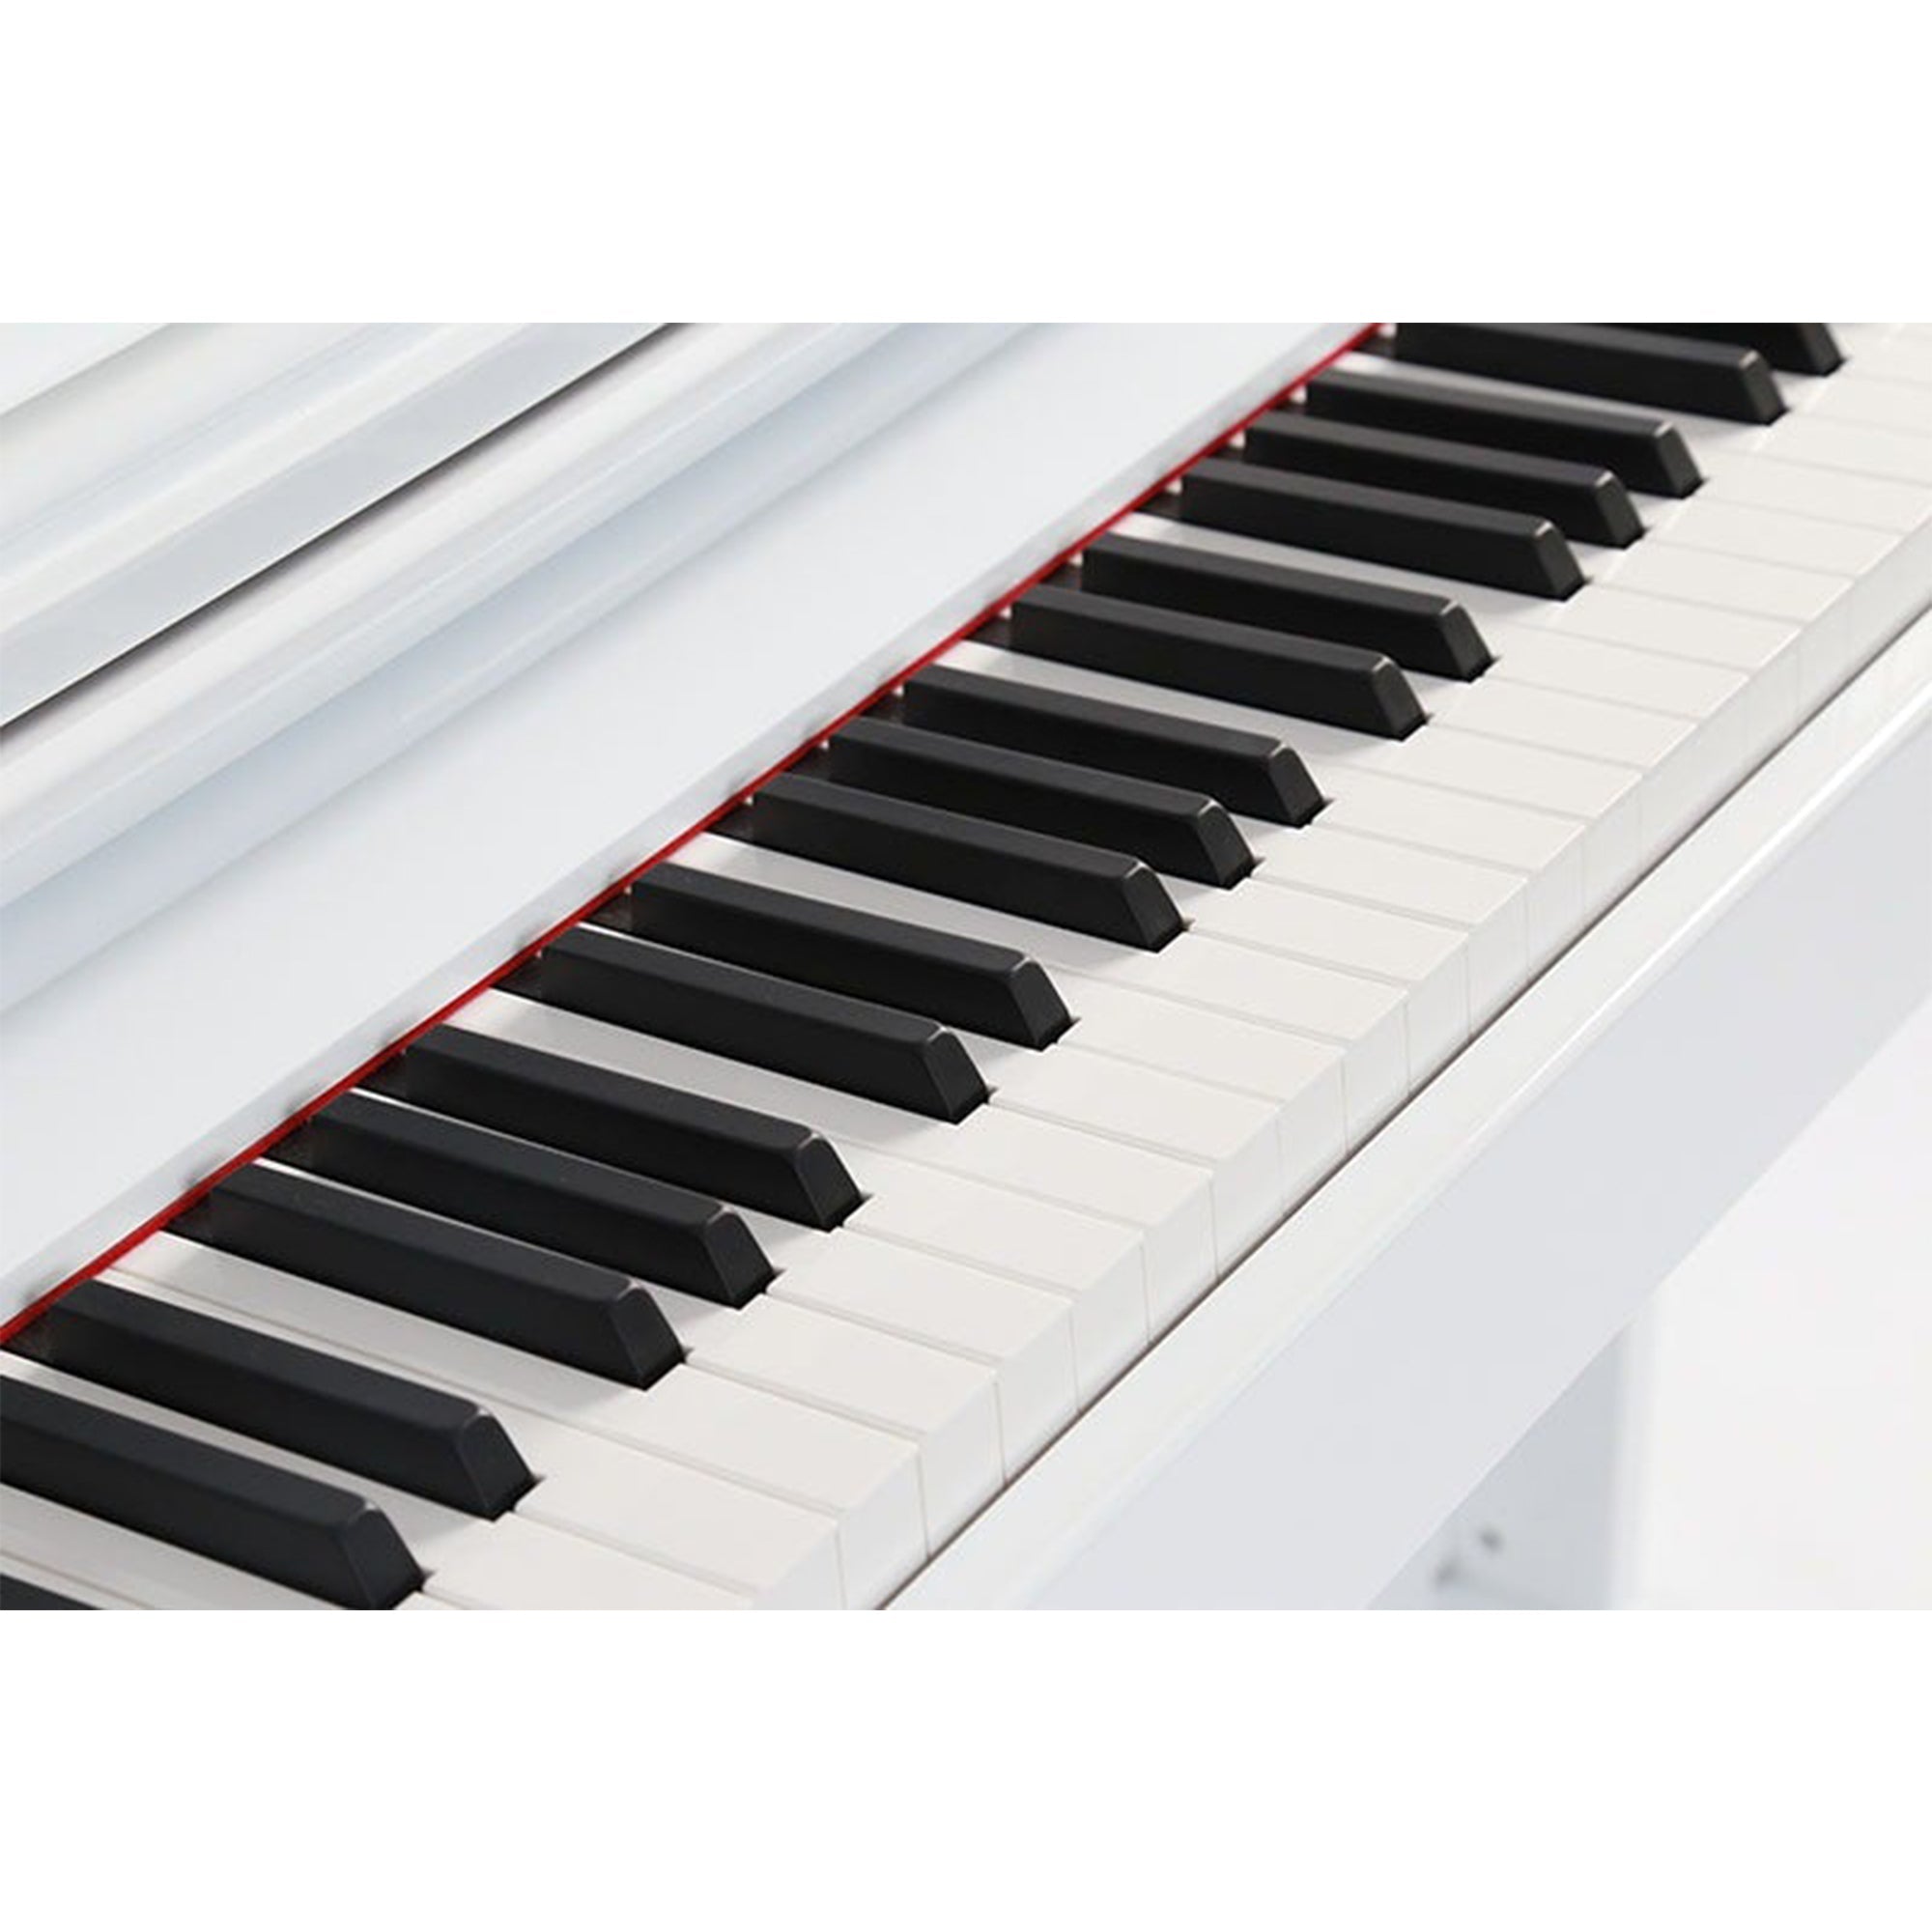 Buy Digital Piano Dubai